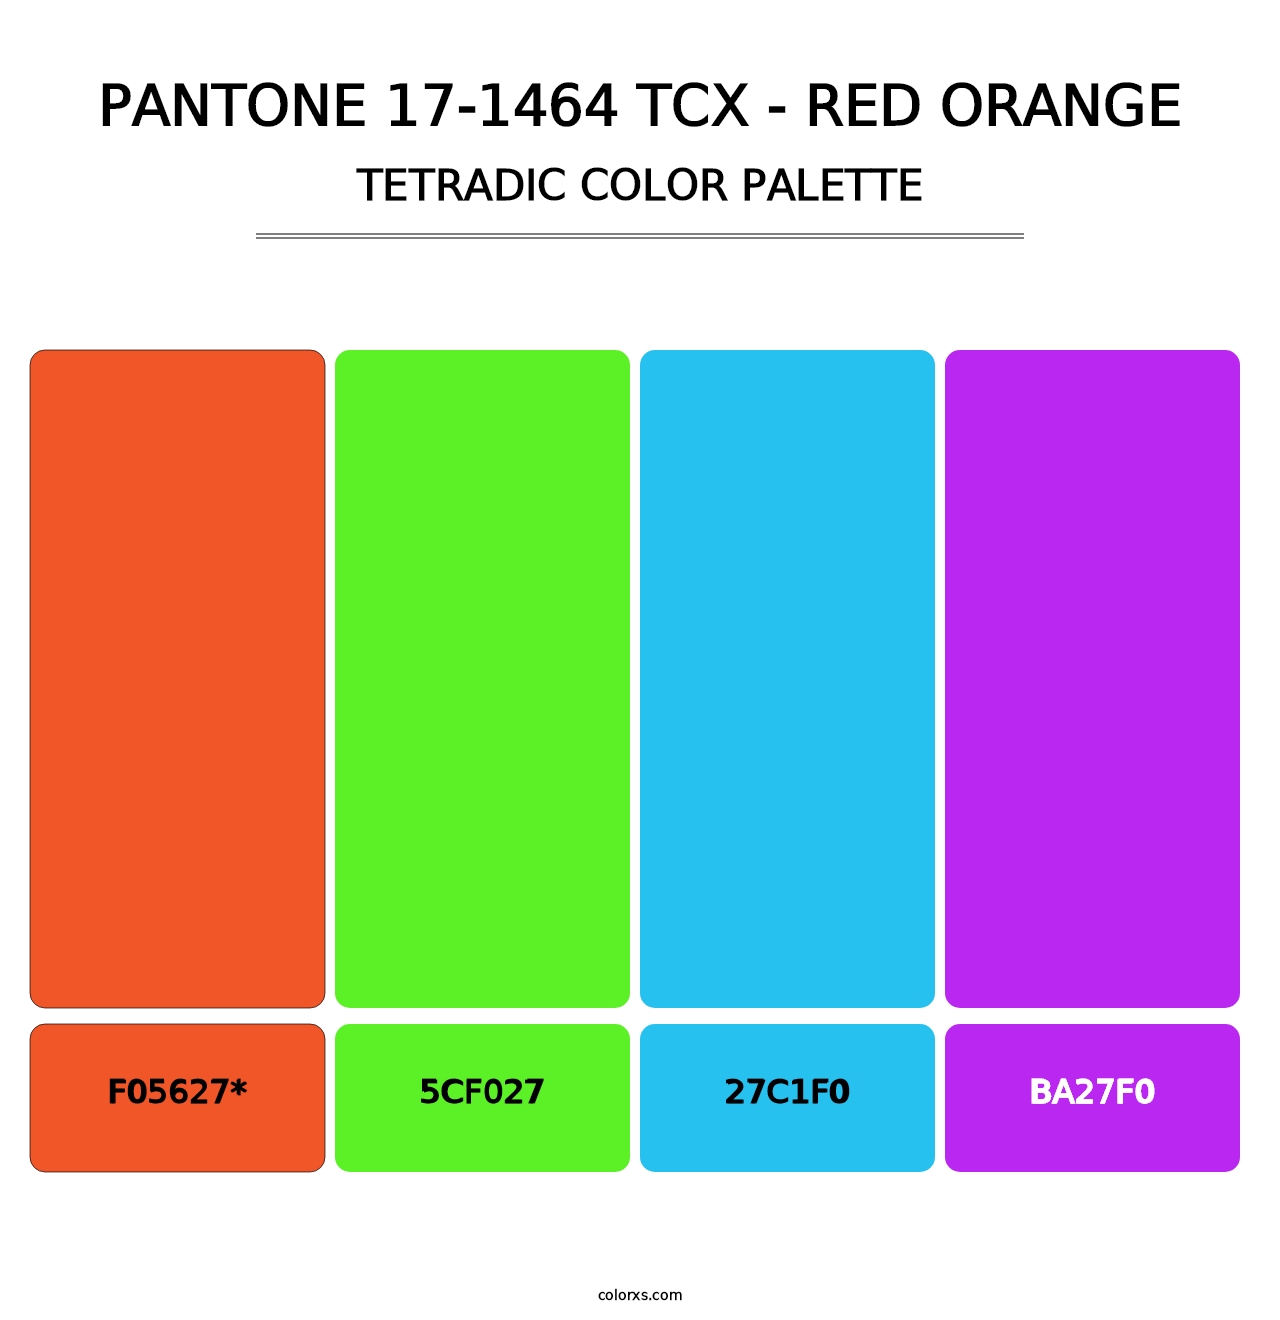 PANTONE 17-1464 TCX - Red Orange - Tetradic Color Palette